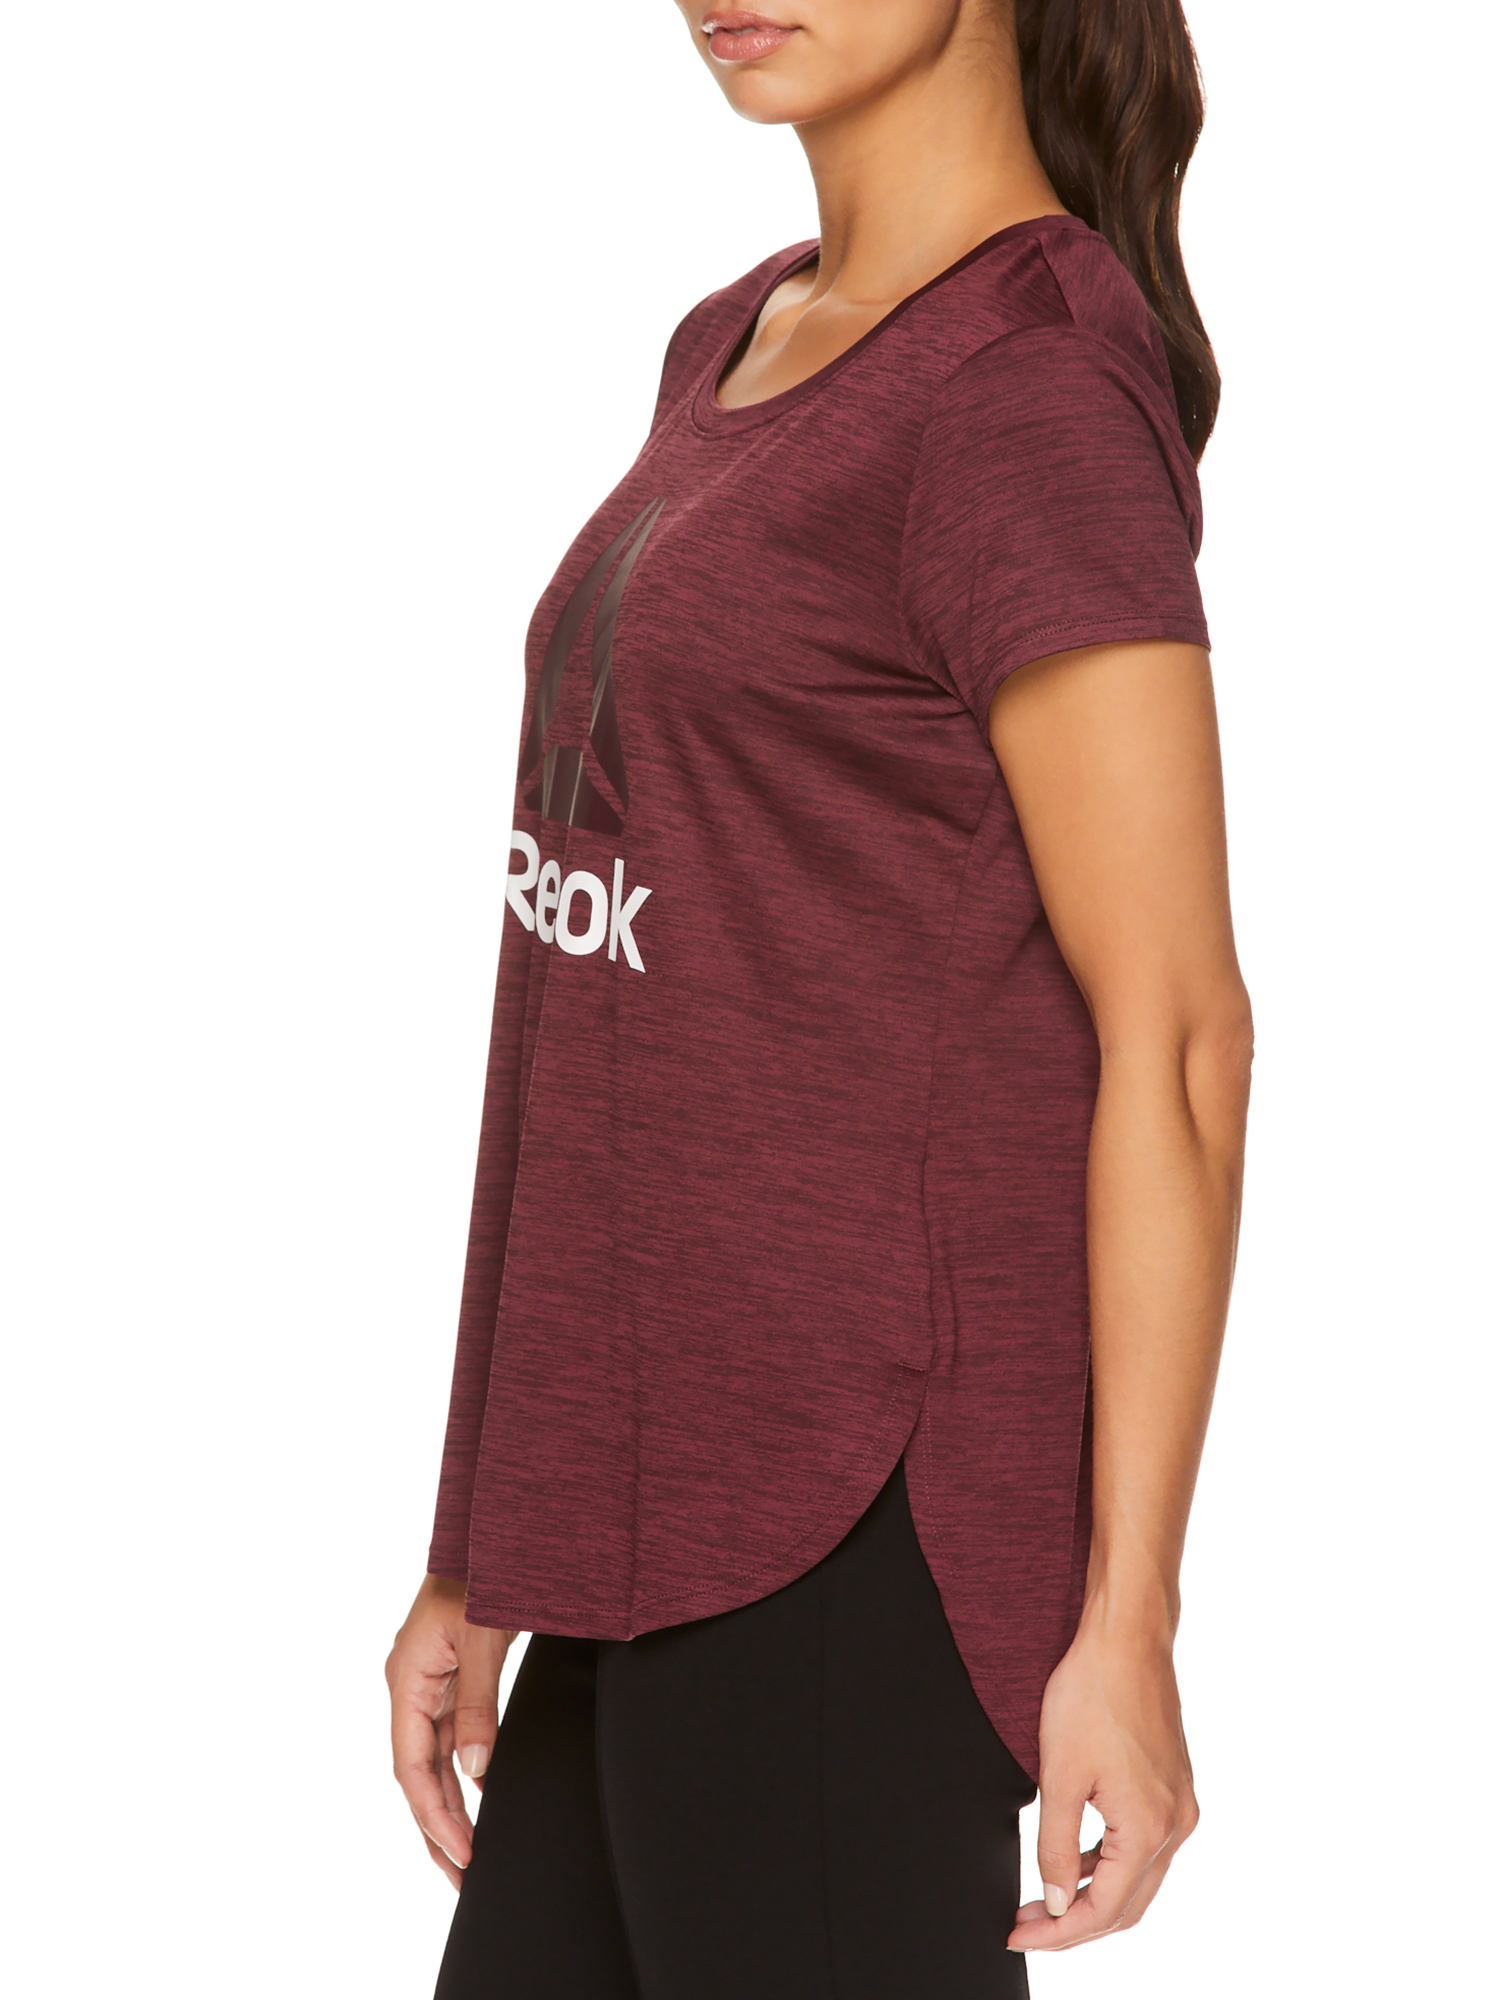 Reebok Womens Cap Sleeve Jersey Tee Shirt - image 3 of 4